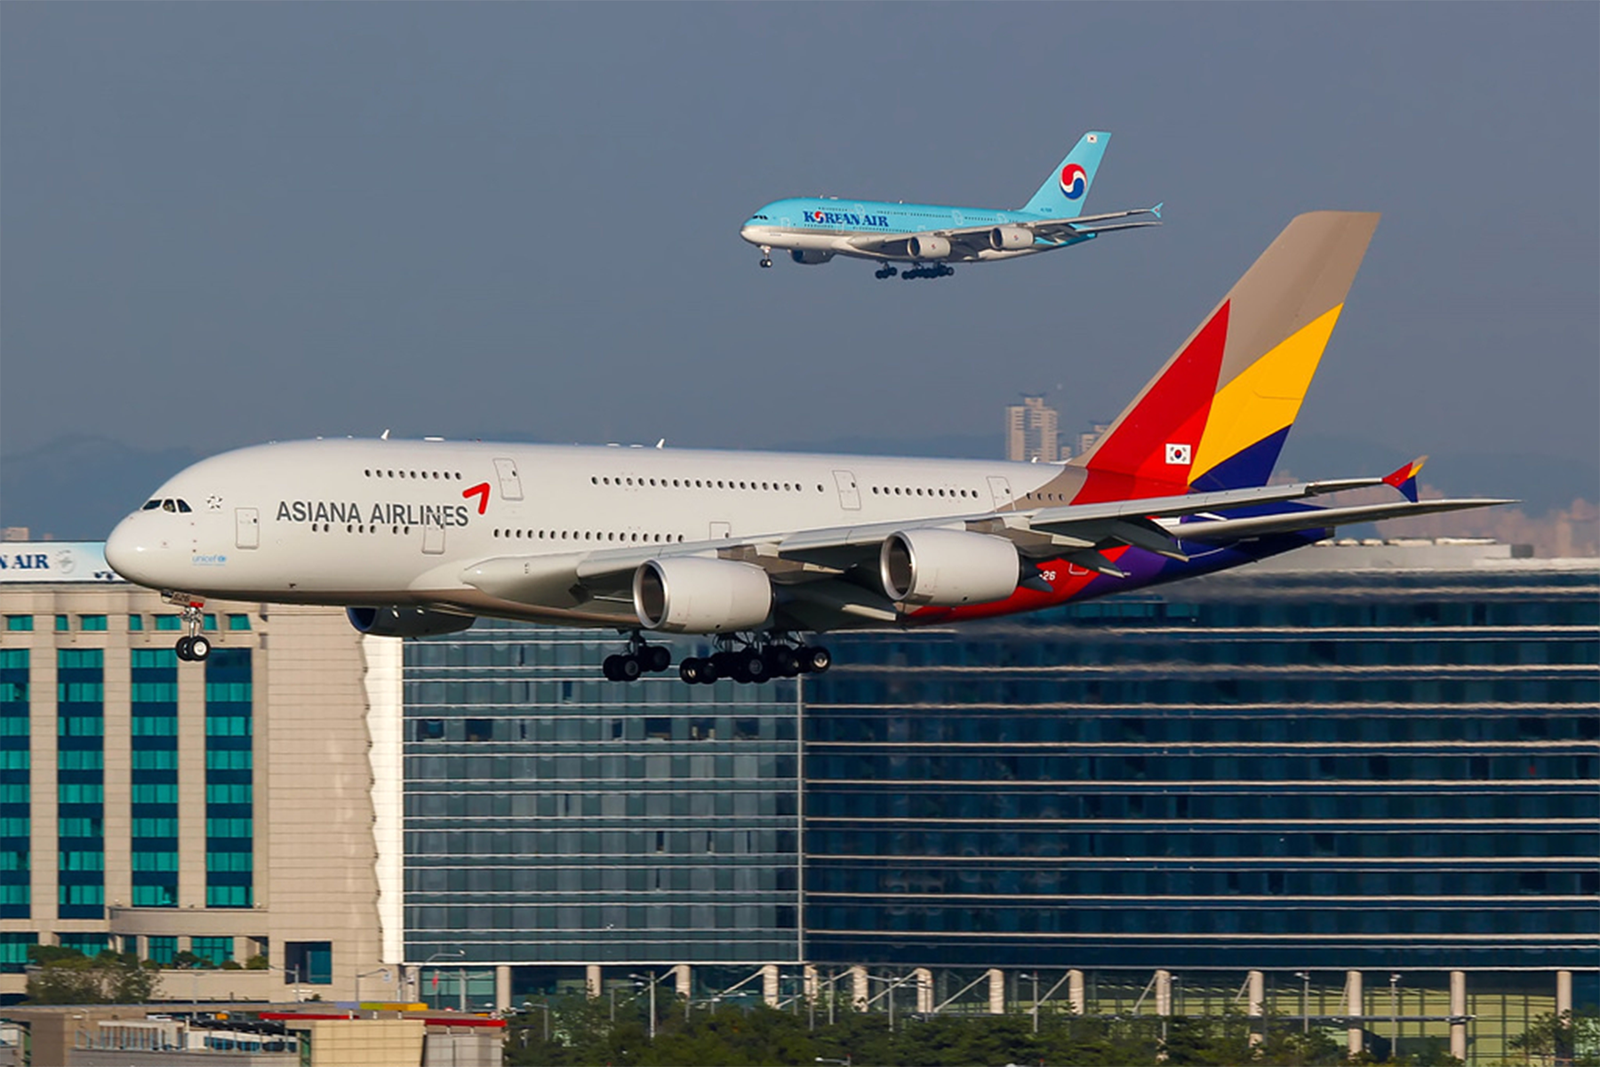 Tanto Korean Air como Asiana Airlines operan el A380. Foto: Hyeonwoo Noh